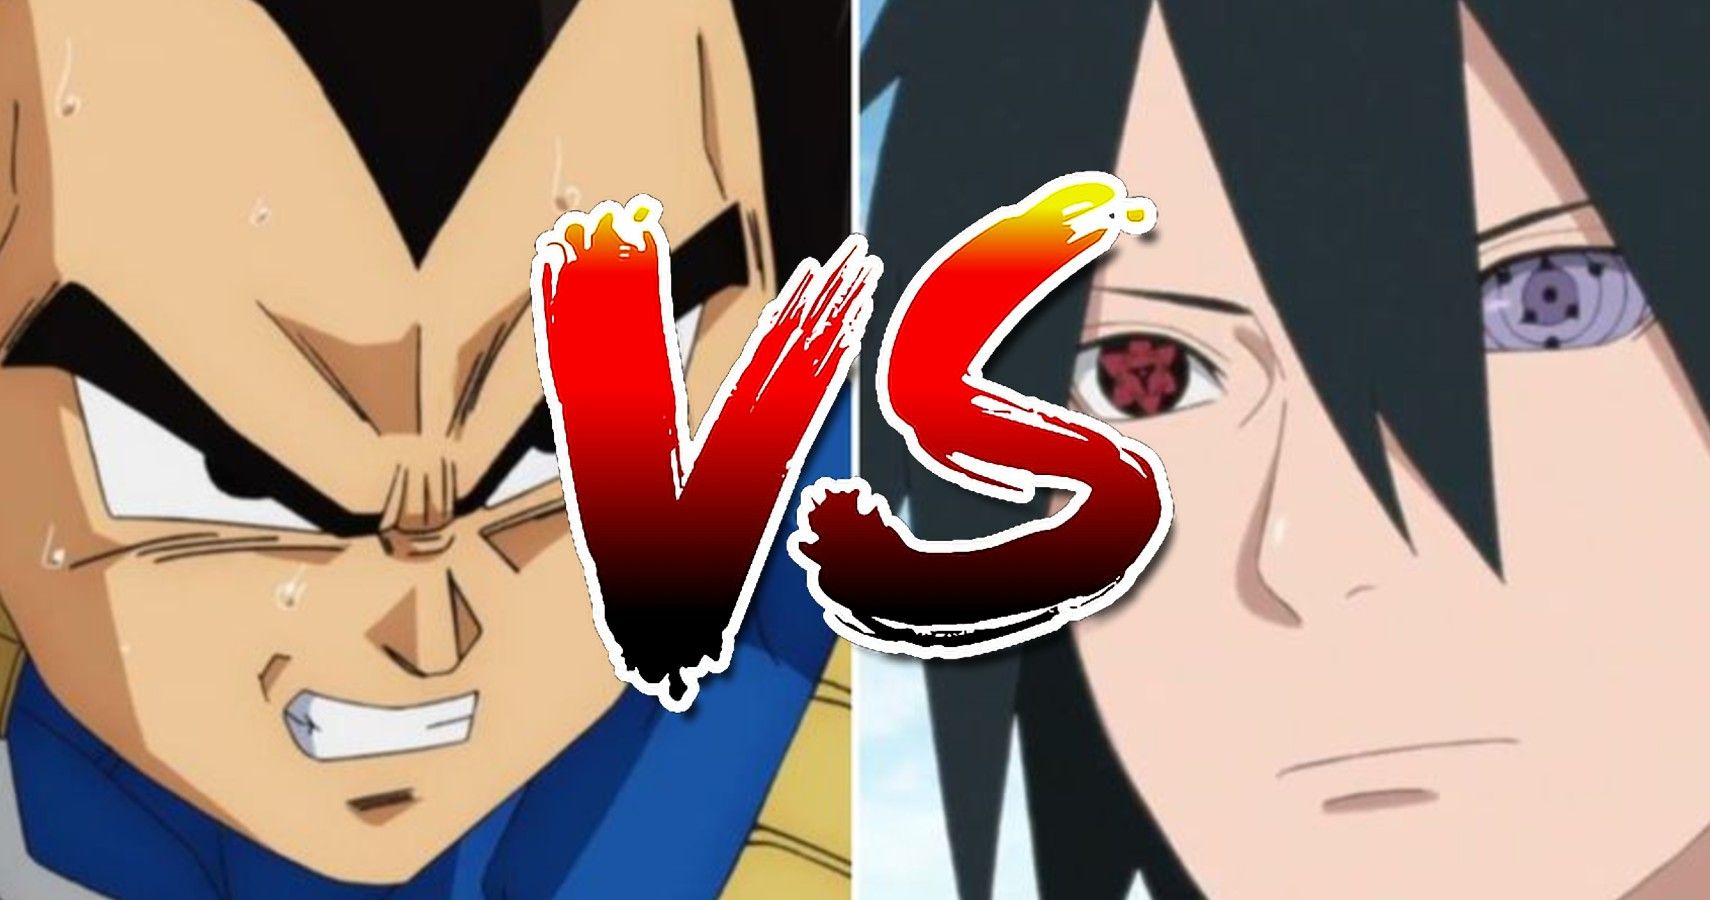 naruto vs goku vs sasuke vs vegeta